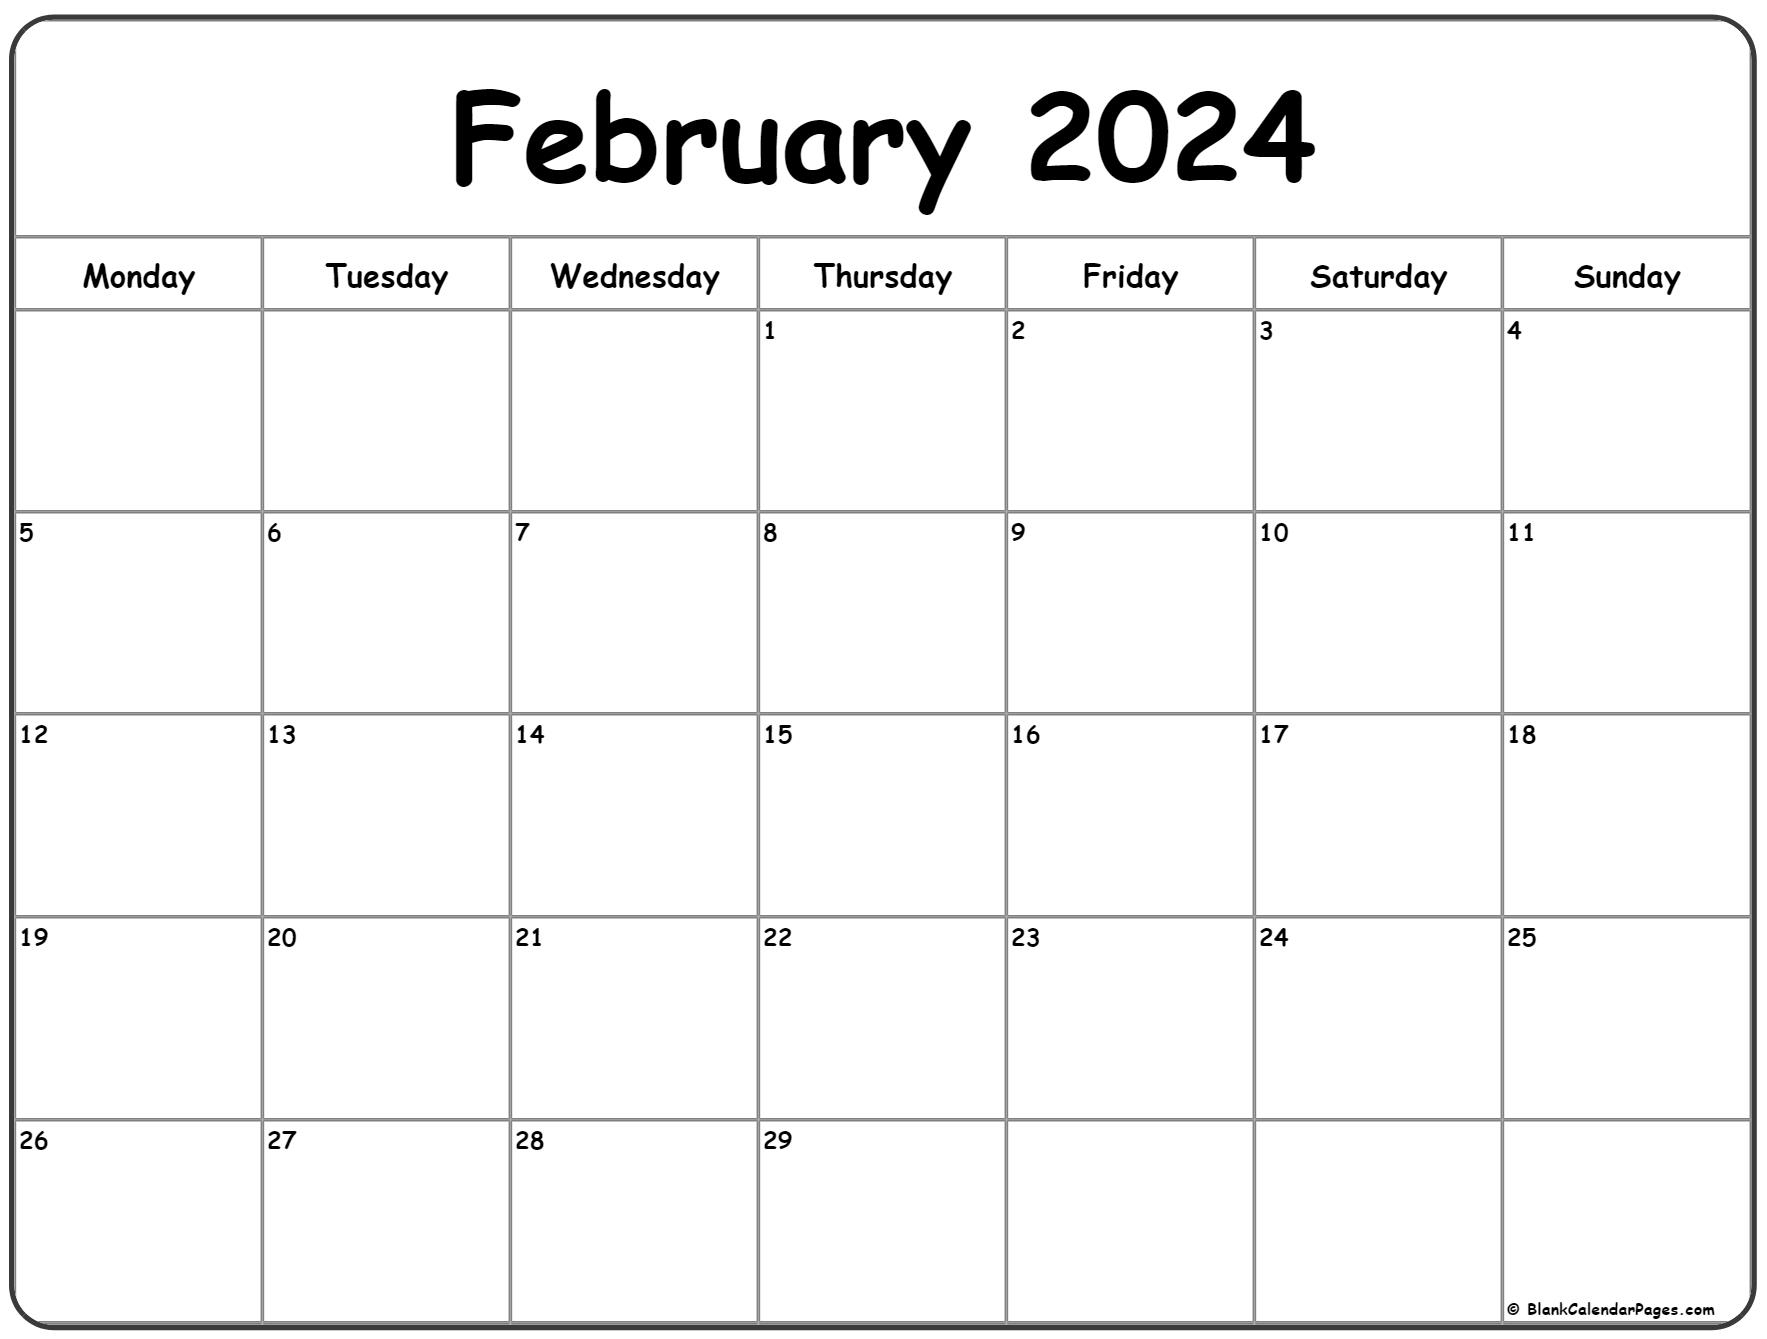 February 2024 Monday Calendar | Monday To Sunday for Free Printable February Calendar 2024